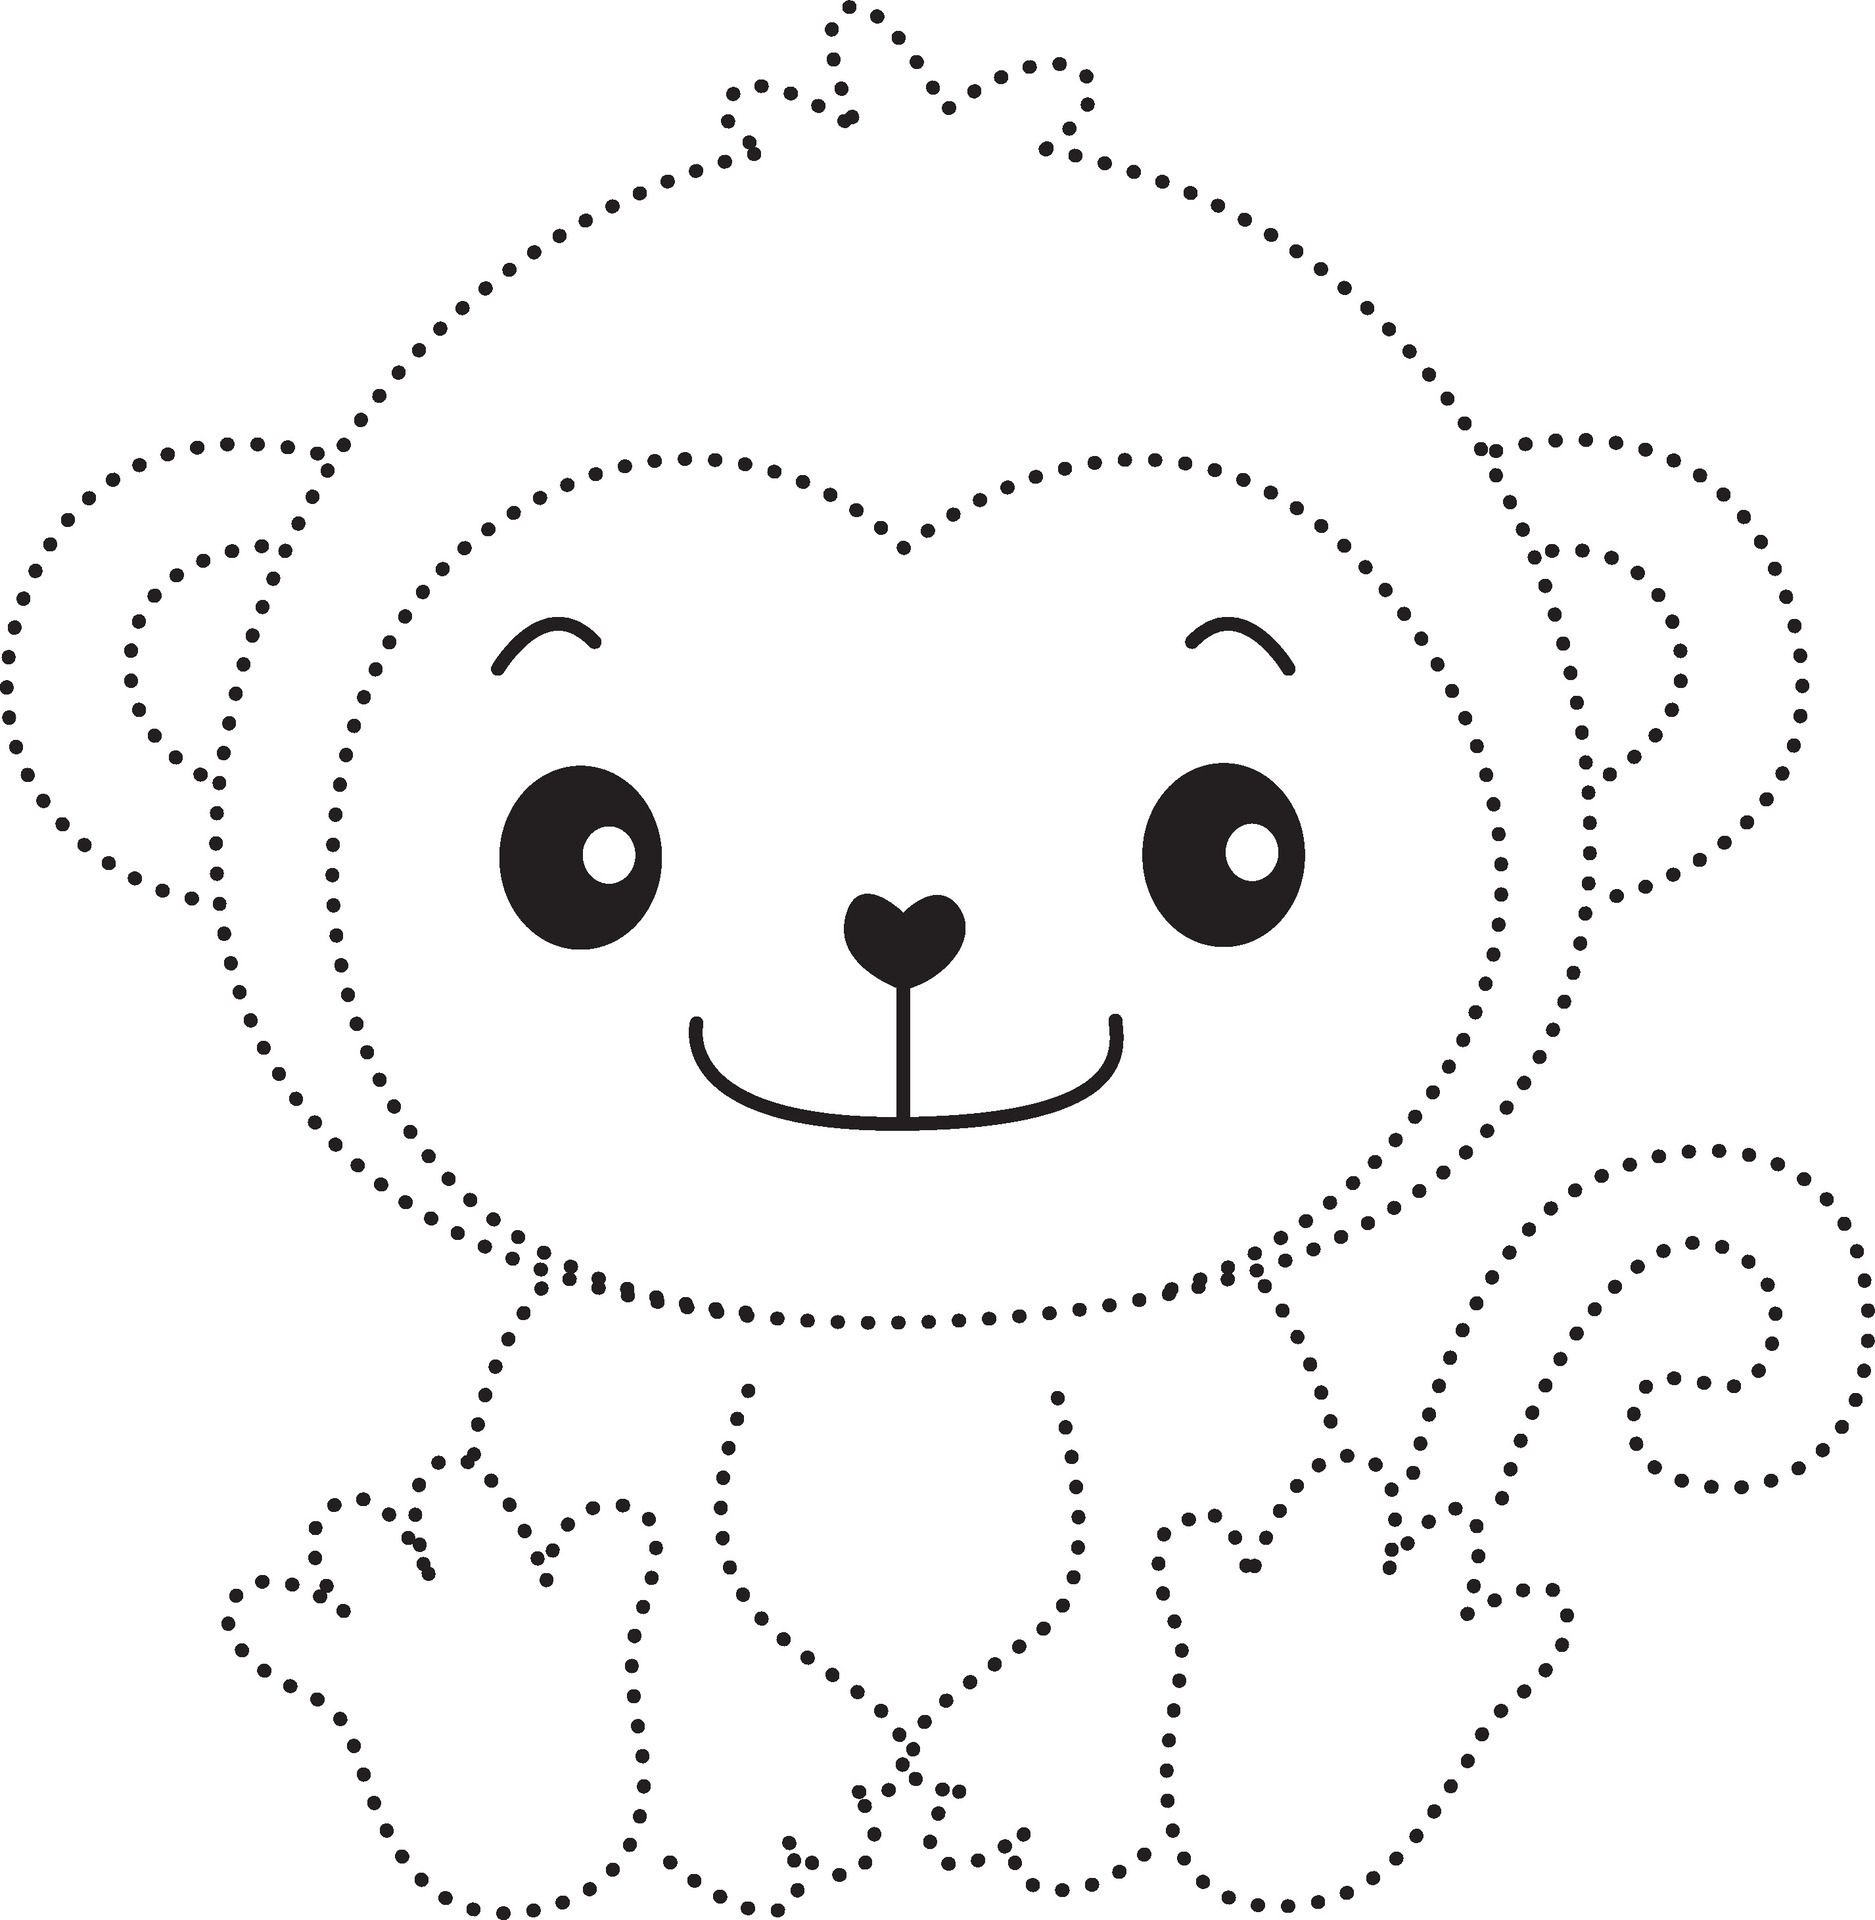 Cute monkey jumping cartoon. Vector drawing icon of cute monkey isolated,  Stock Vector, Vector And Low Budget Royalty Free Image. Pic. ESY-057913751  | agefotostock